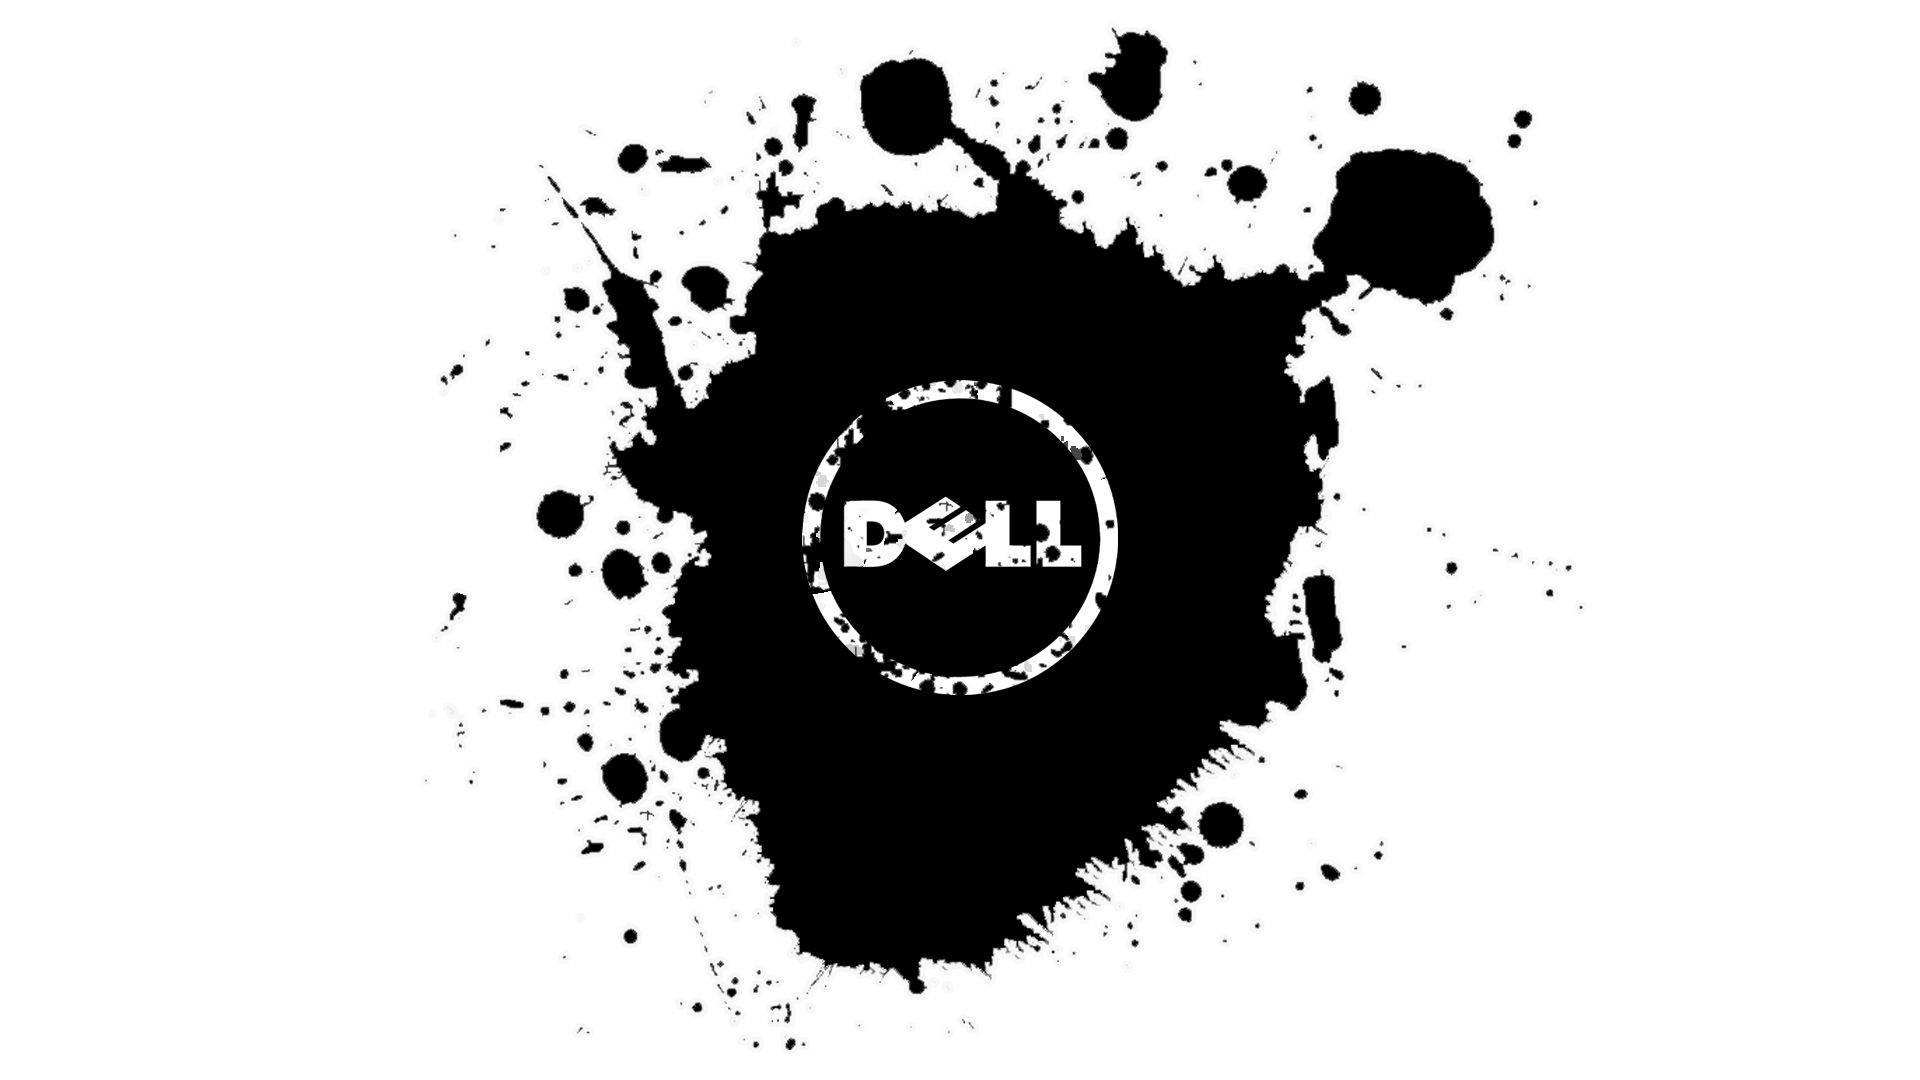 Dell Black Paint Splash Background